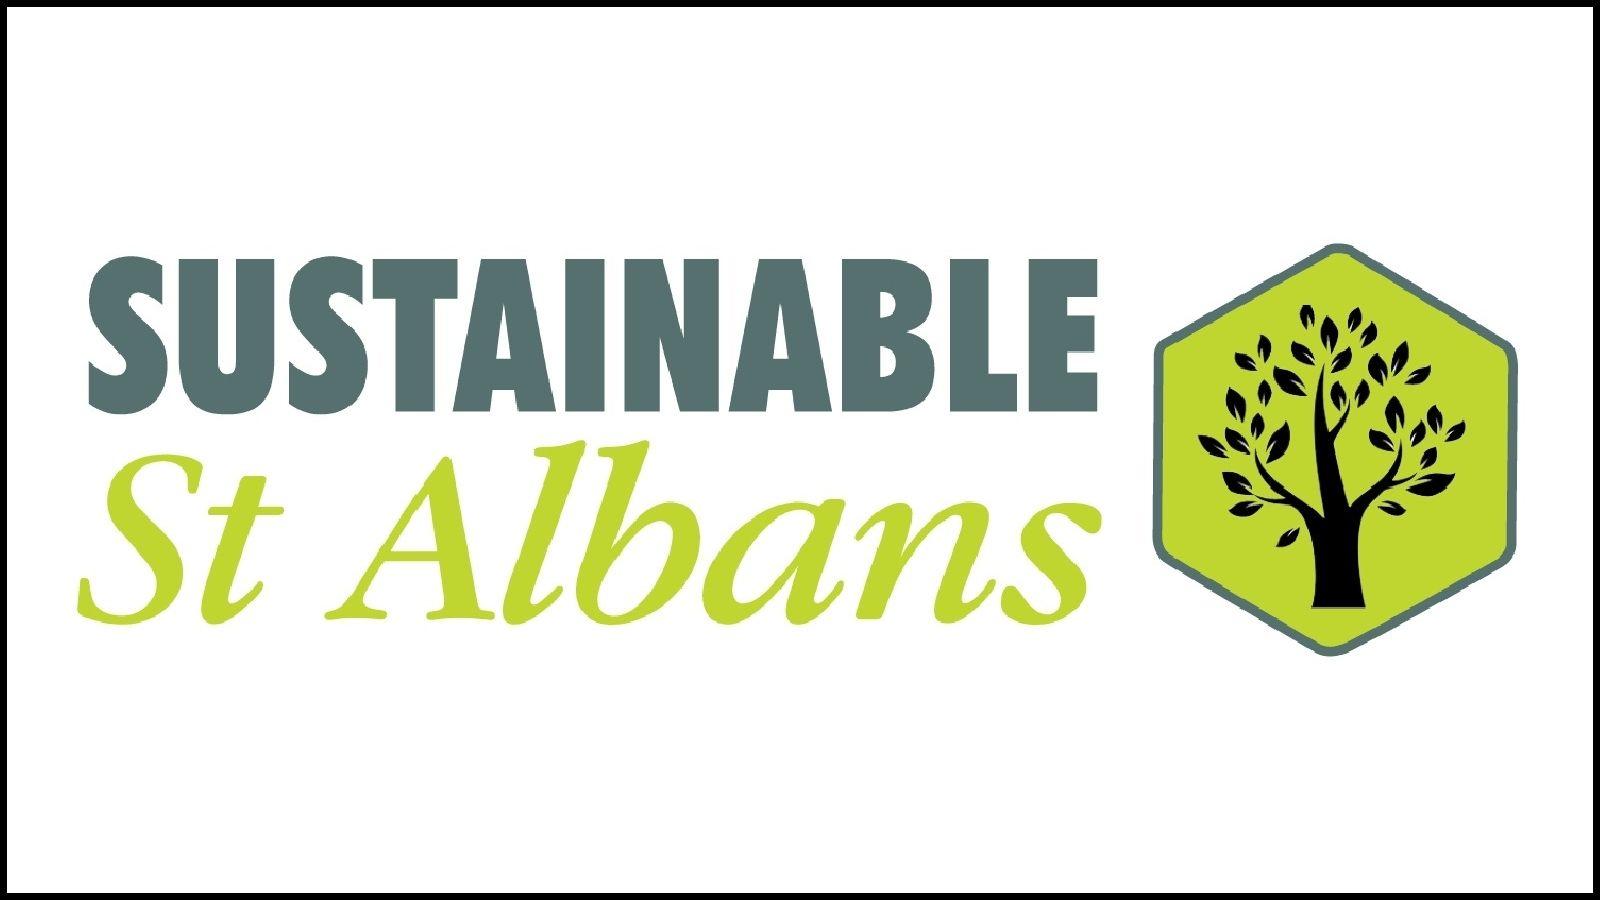 Sustainable St Albans logo